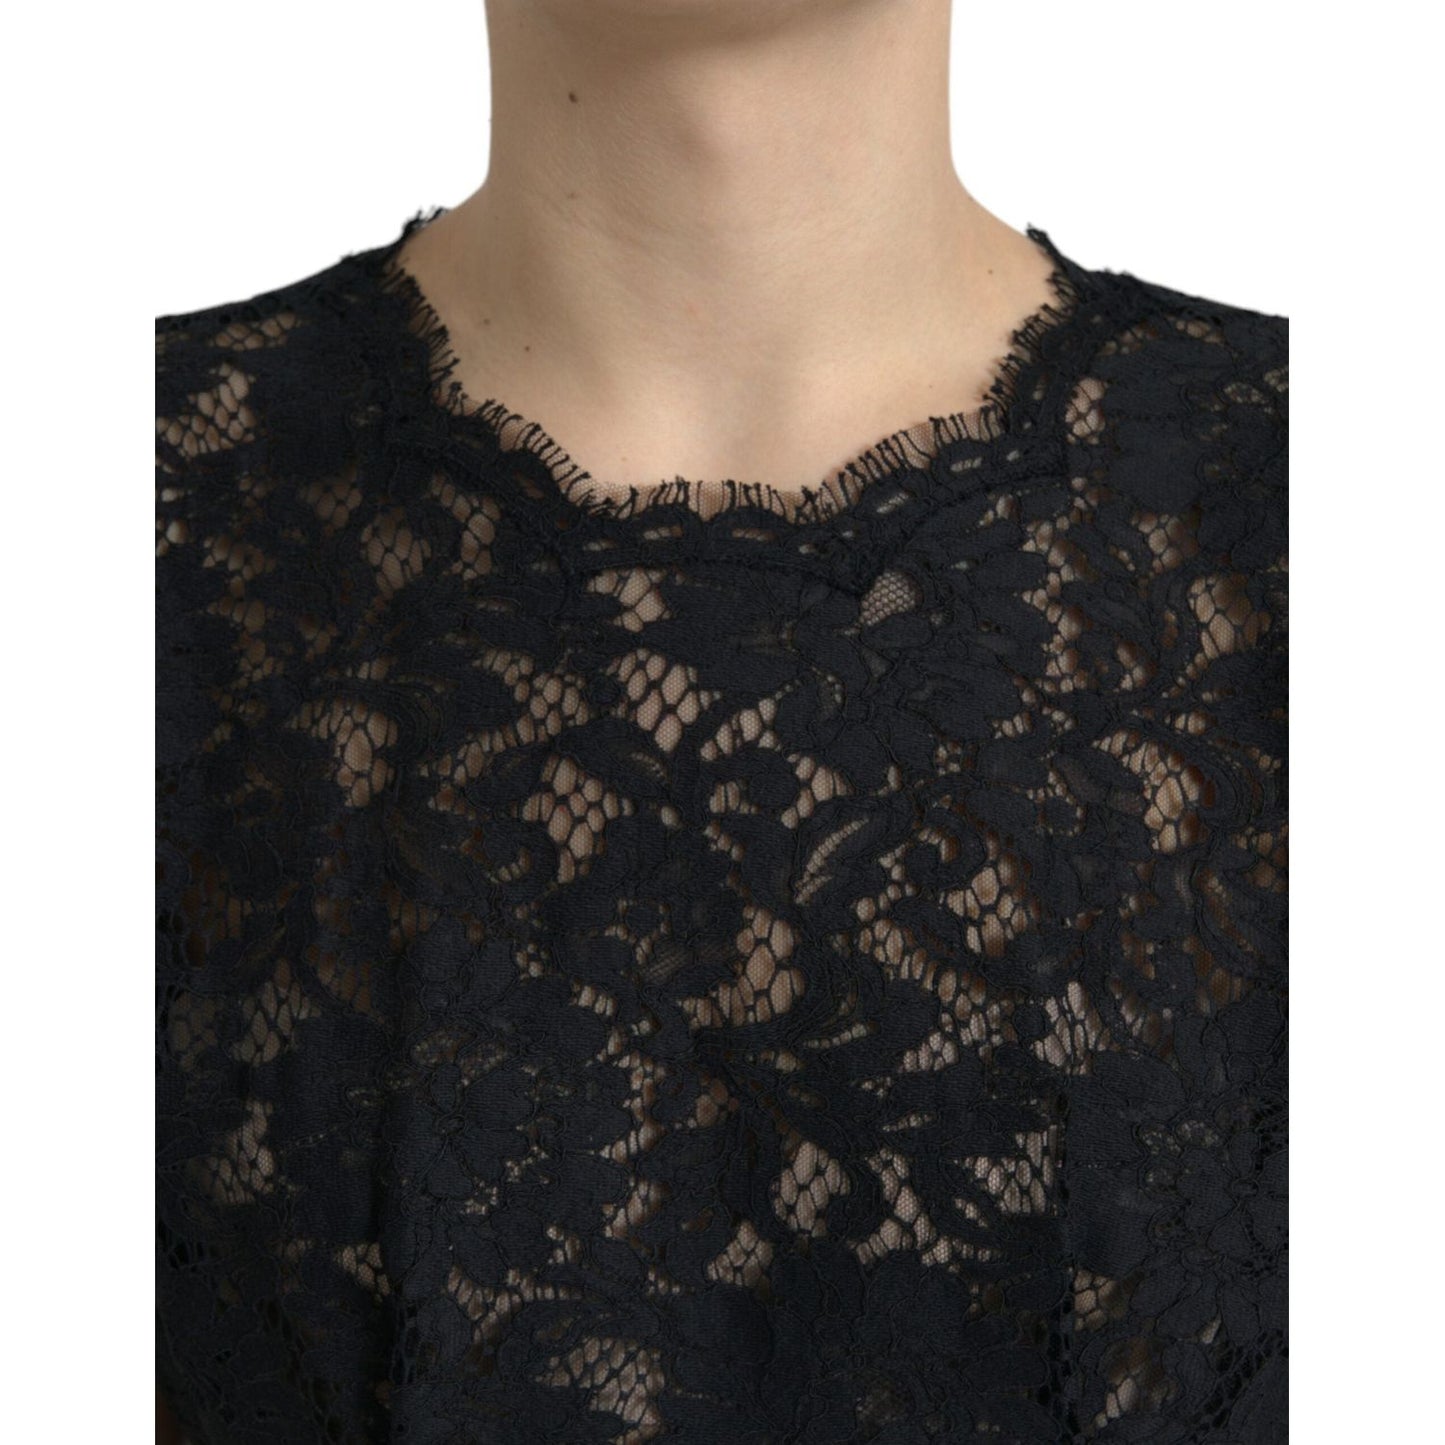 Dolce & Gabbana Elegant Black Floral Lace A-Line Mini Dress black-floral-lace-cotton-a-line-mini-dress